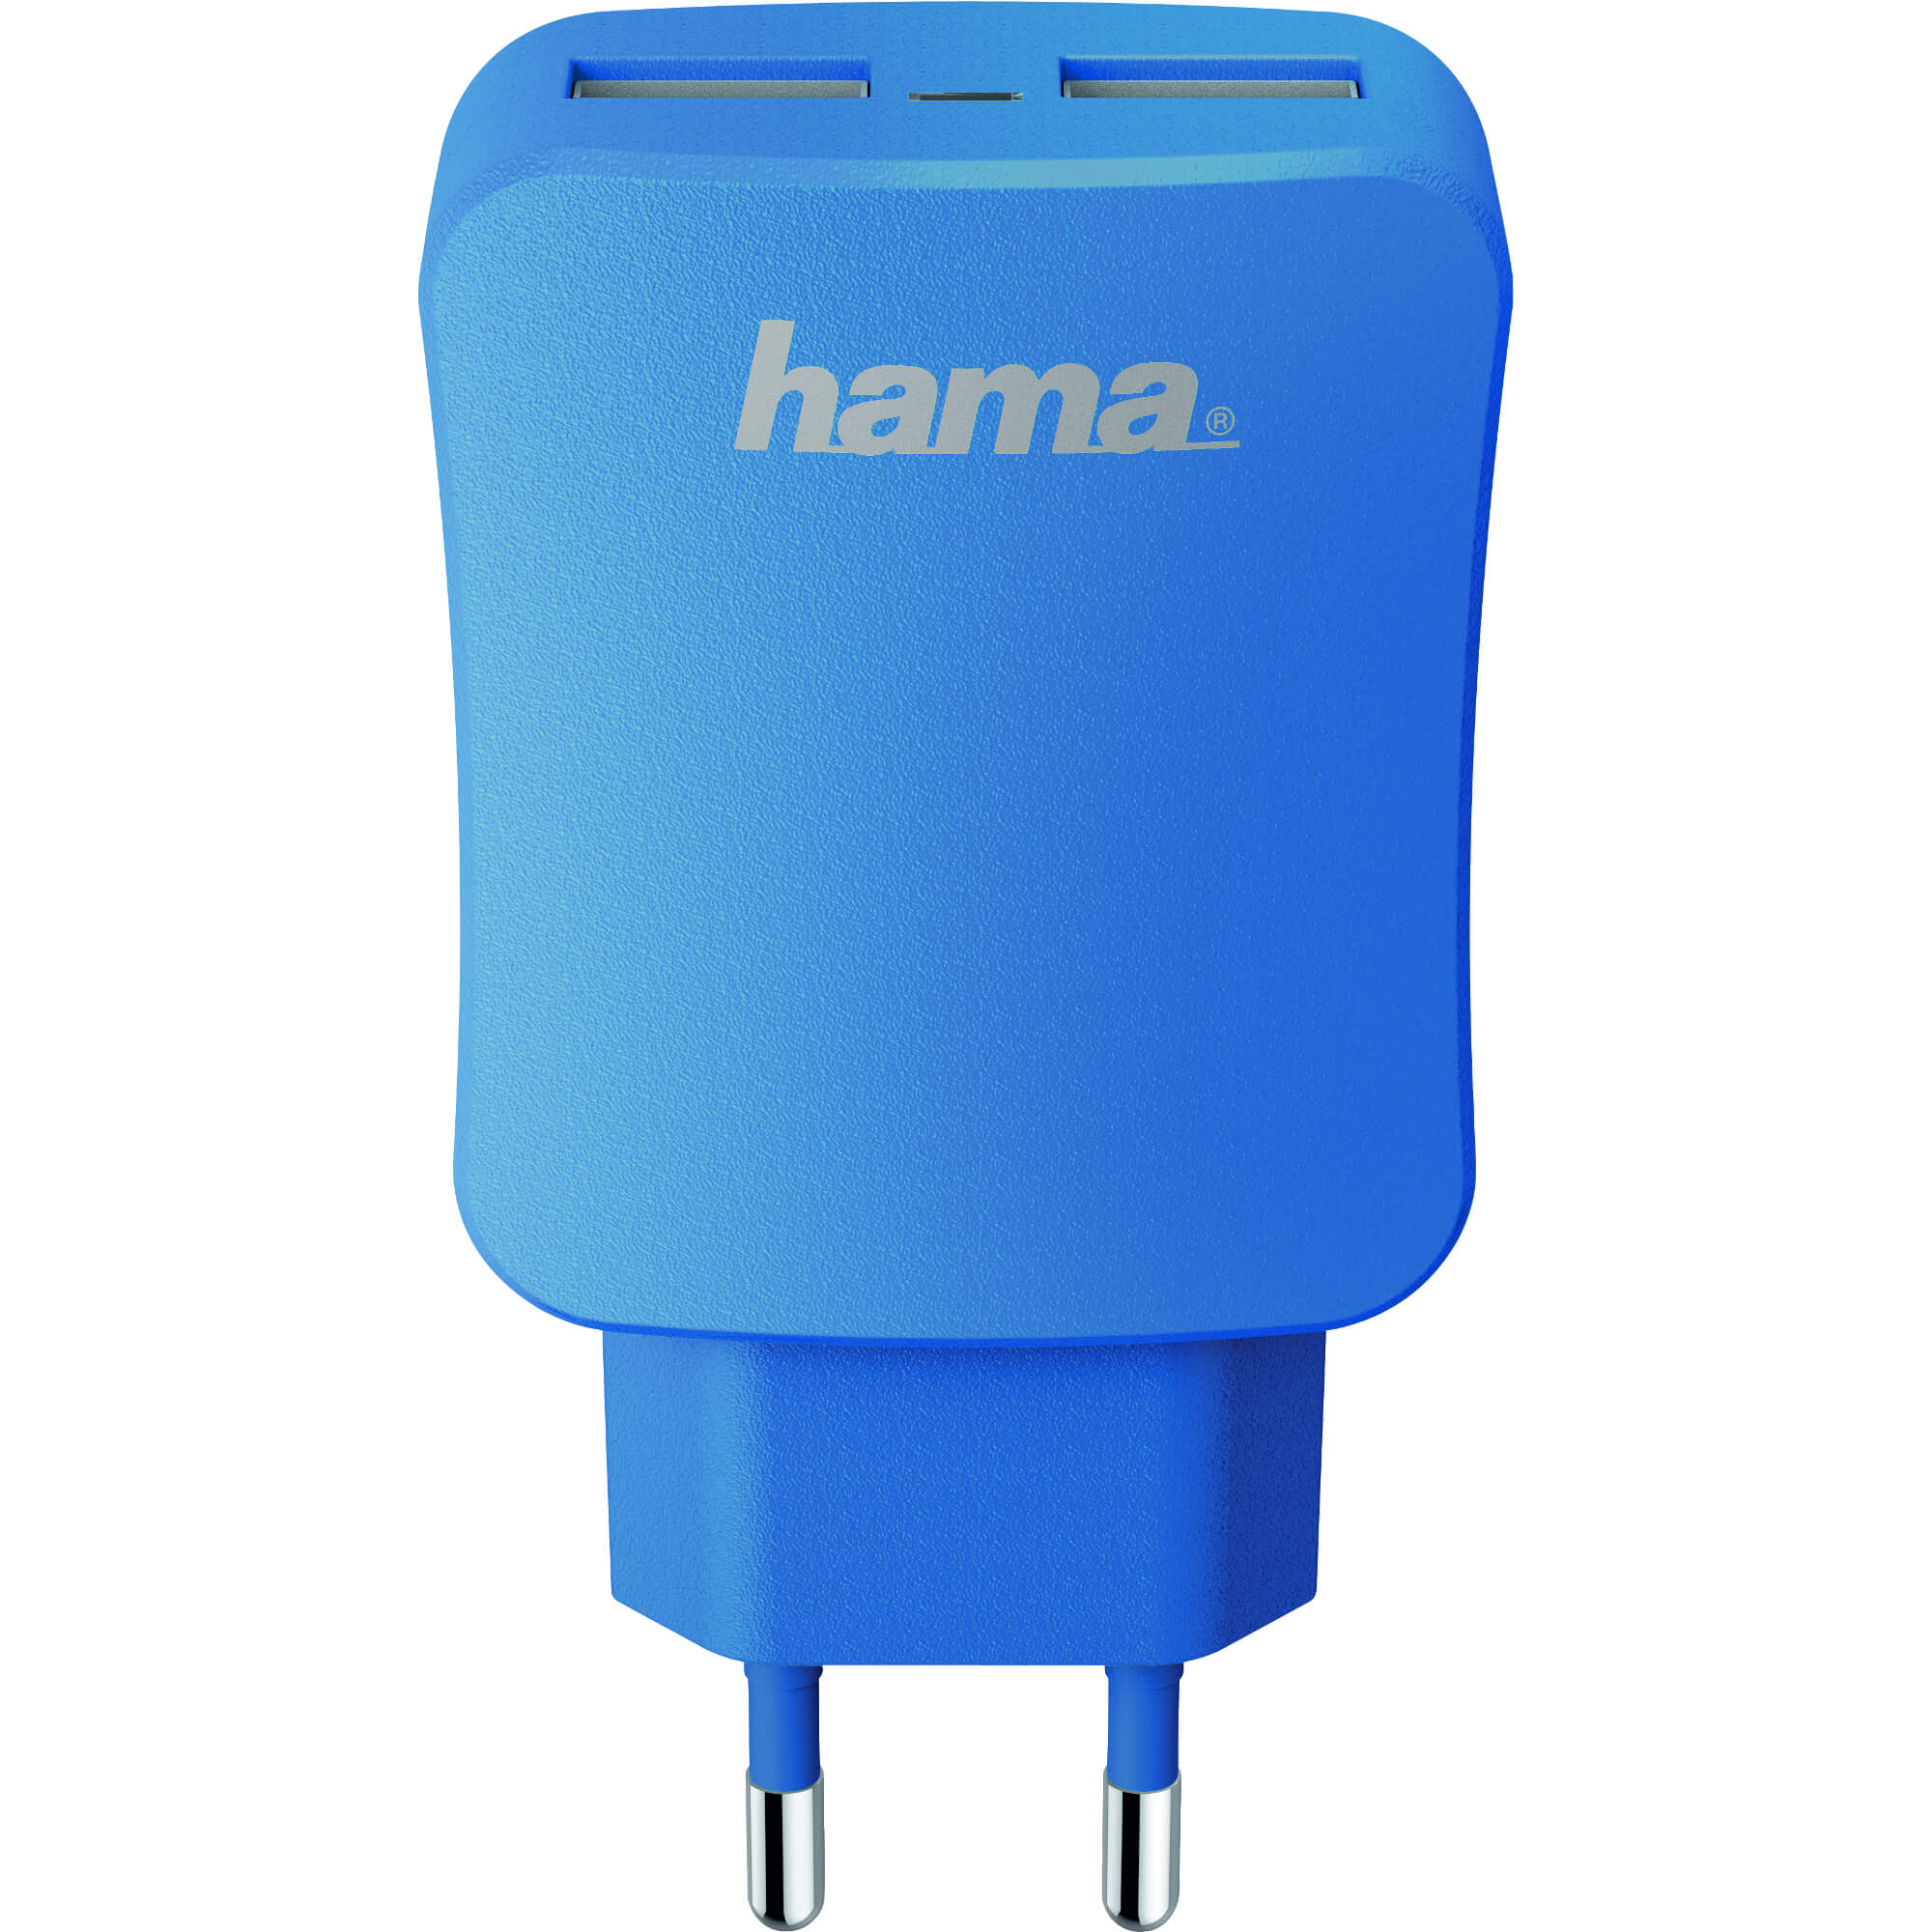  Incarcator retea Hama 178213, Dual USB, Albastru 